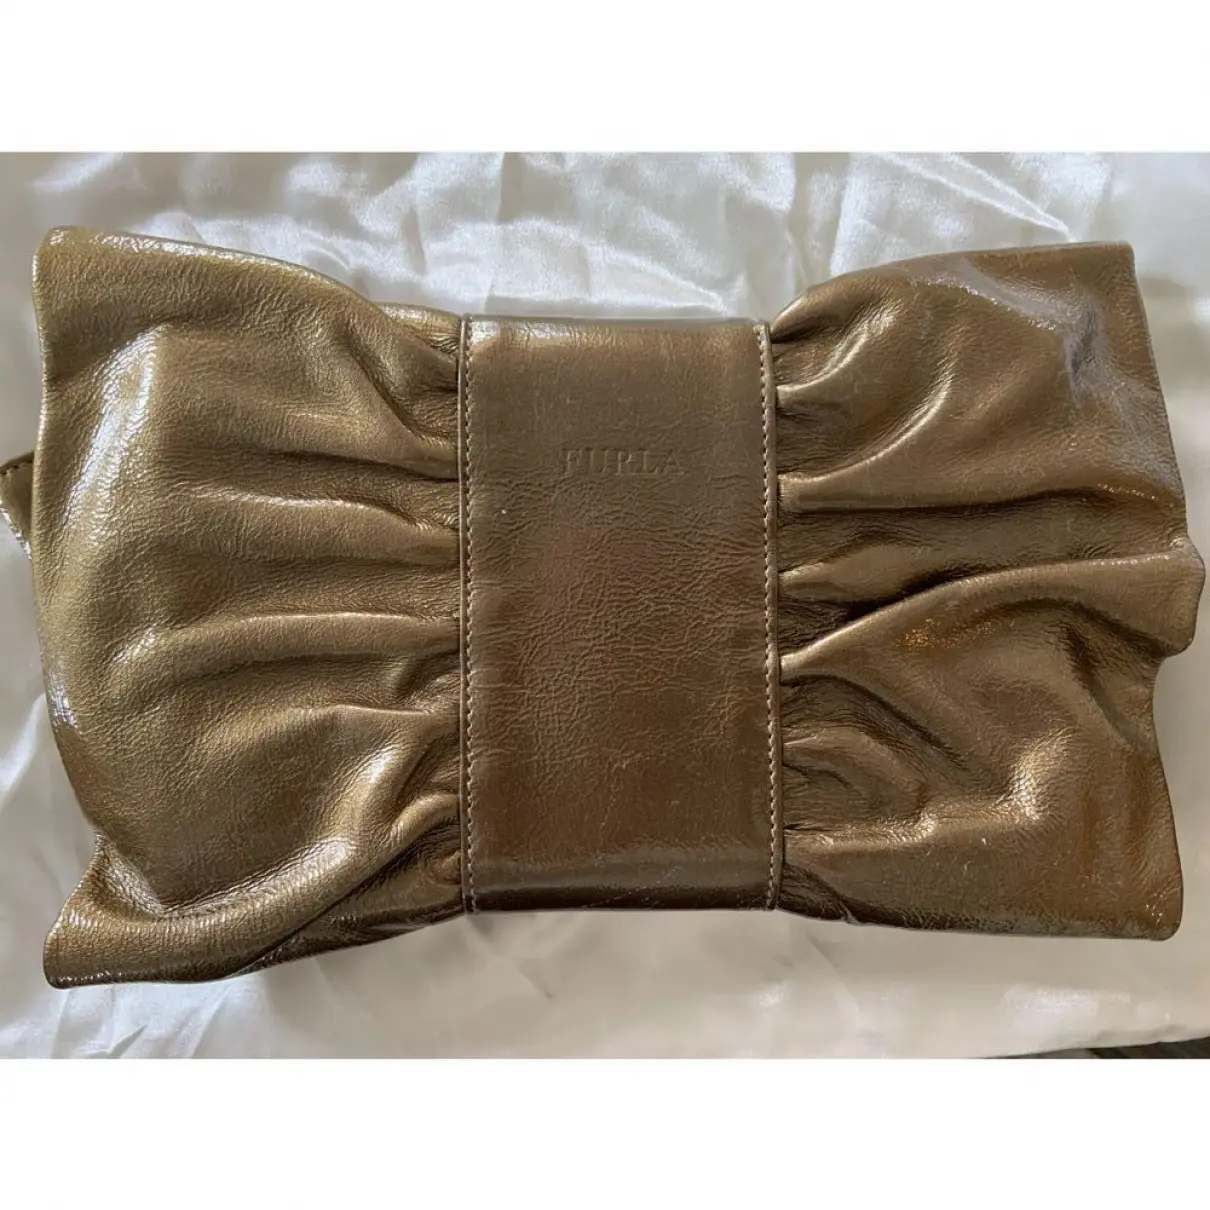 Buy Furla Patent leather clutch bag online